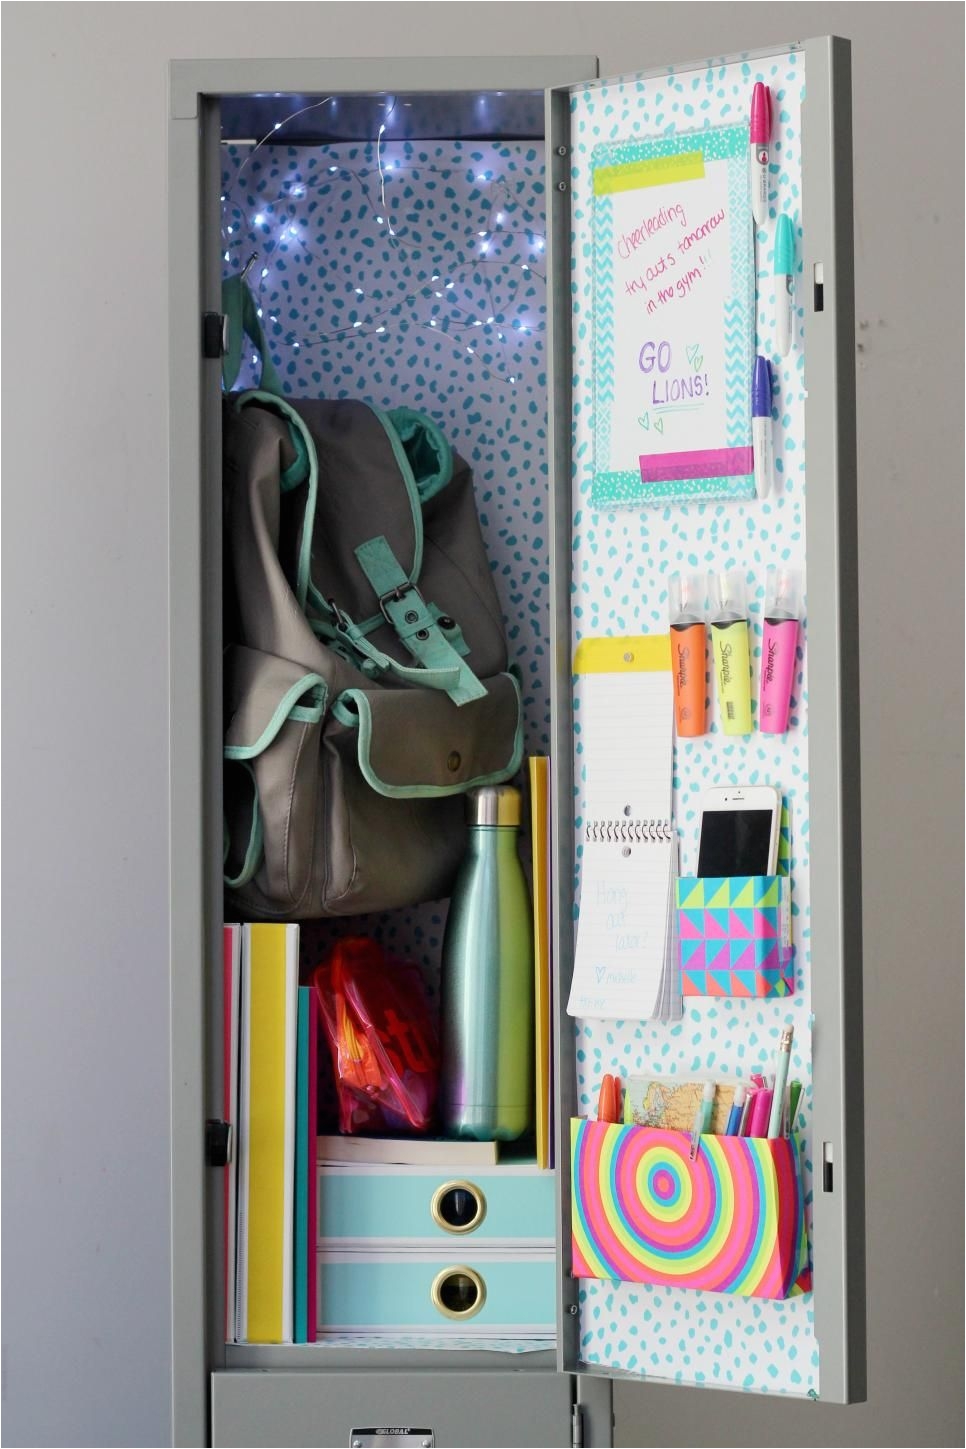 Virtual Locker Decorator 22 Diy Locker Decorating Ideas Pinterest Diy Locker Lockers and